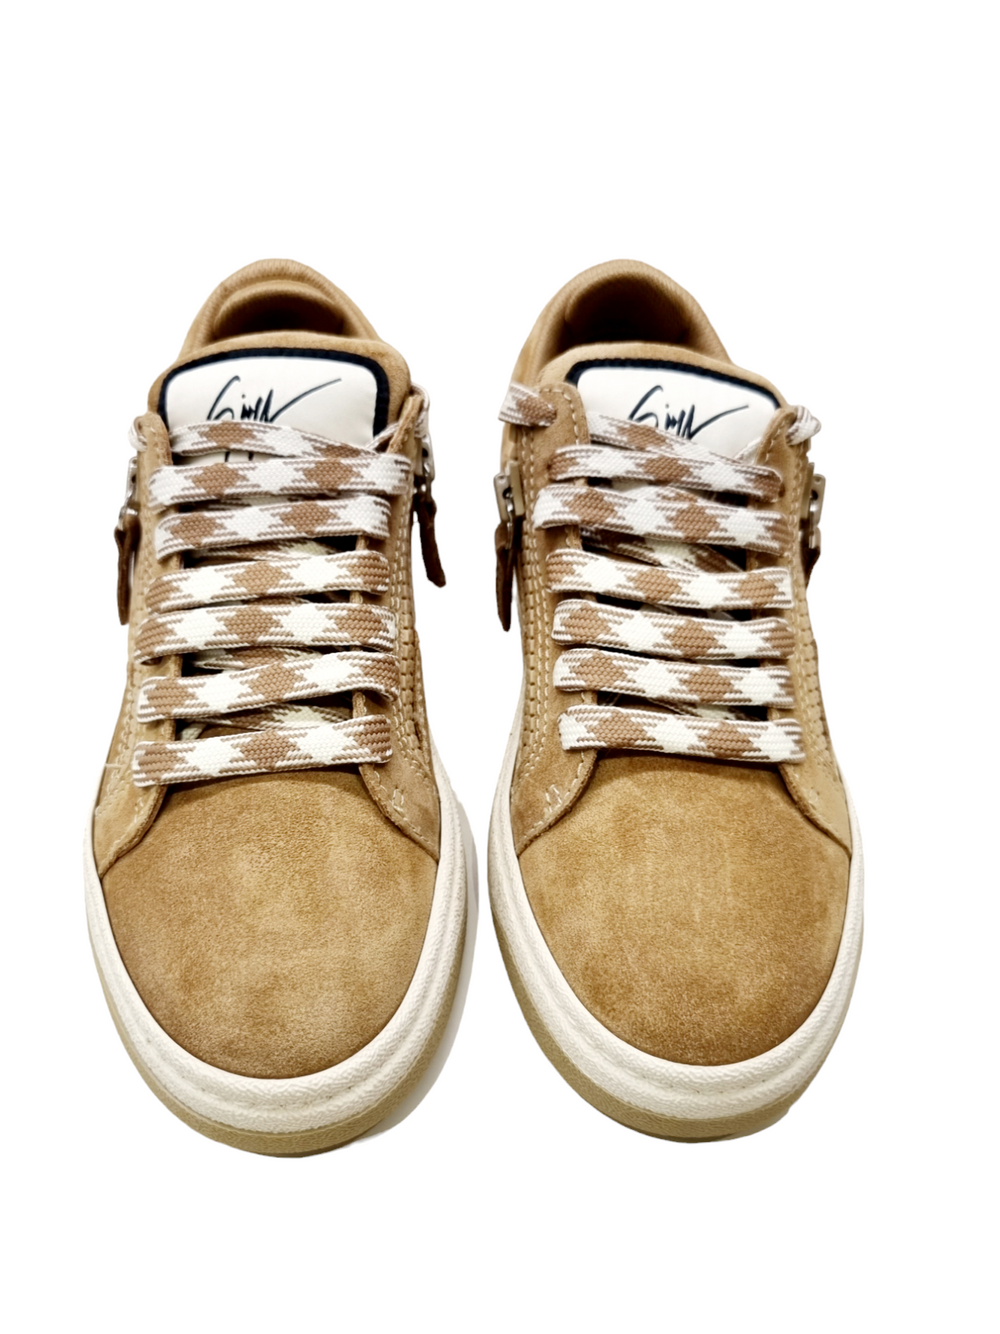 Gz94 Tan Suede Sneakers - GIUSEPPE-ZANOTTI - Liberty Shoes Australia